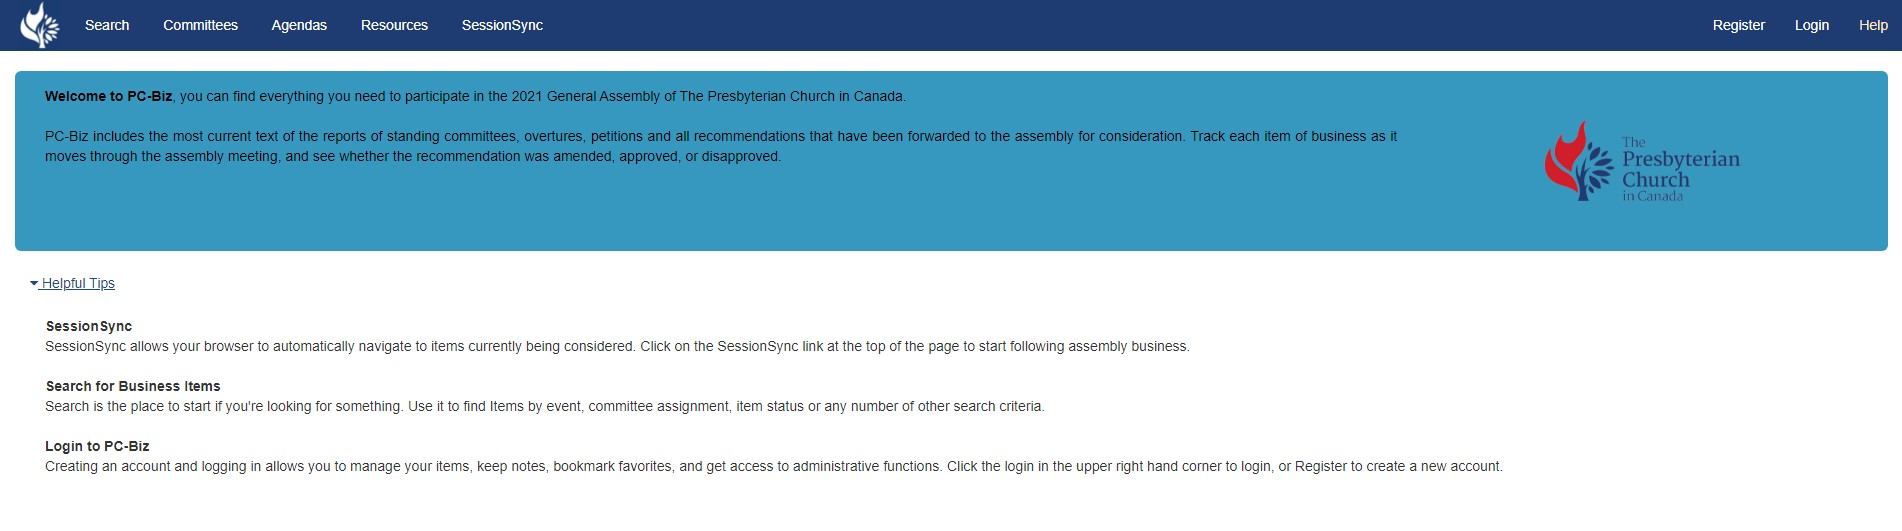 Assembly.presbyterian.ca, the Presbyterian Church in Canada, June 2021